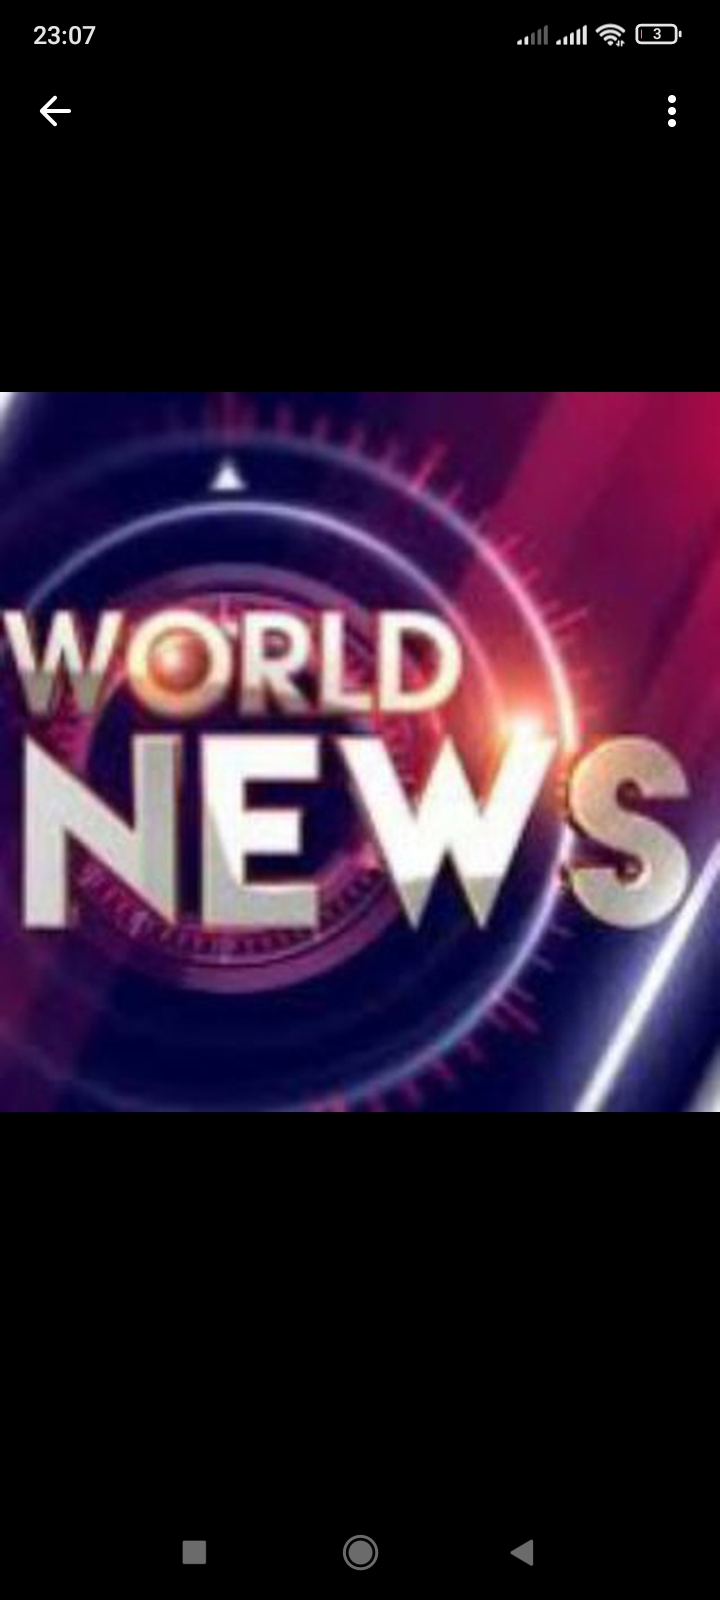 WORLD NEWS